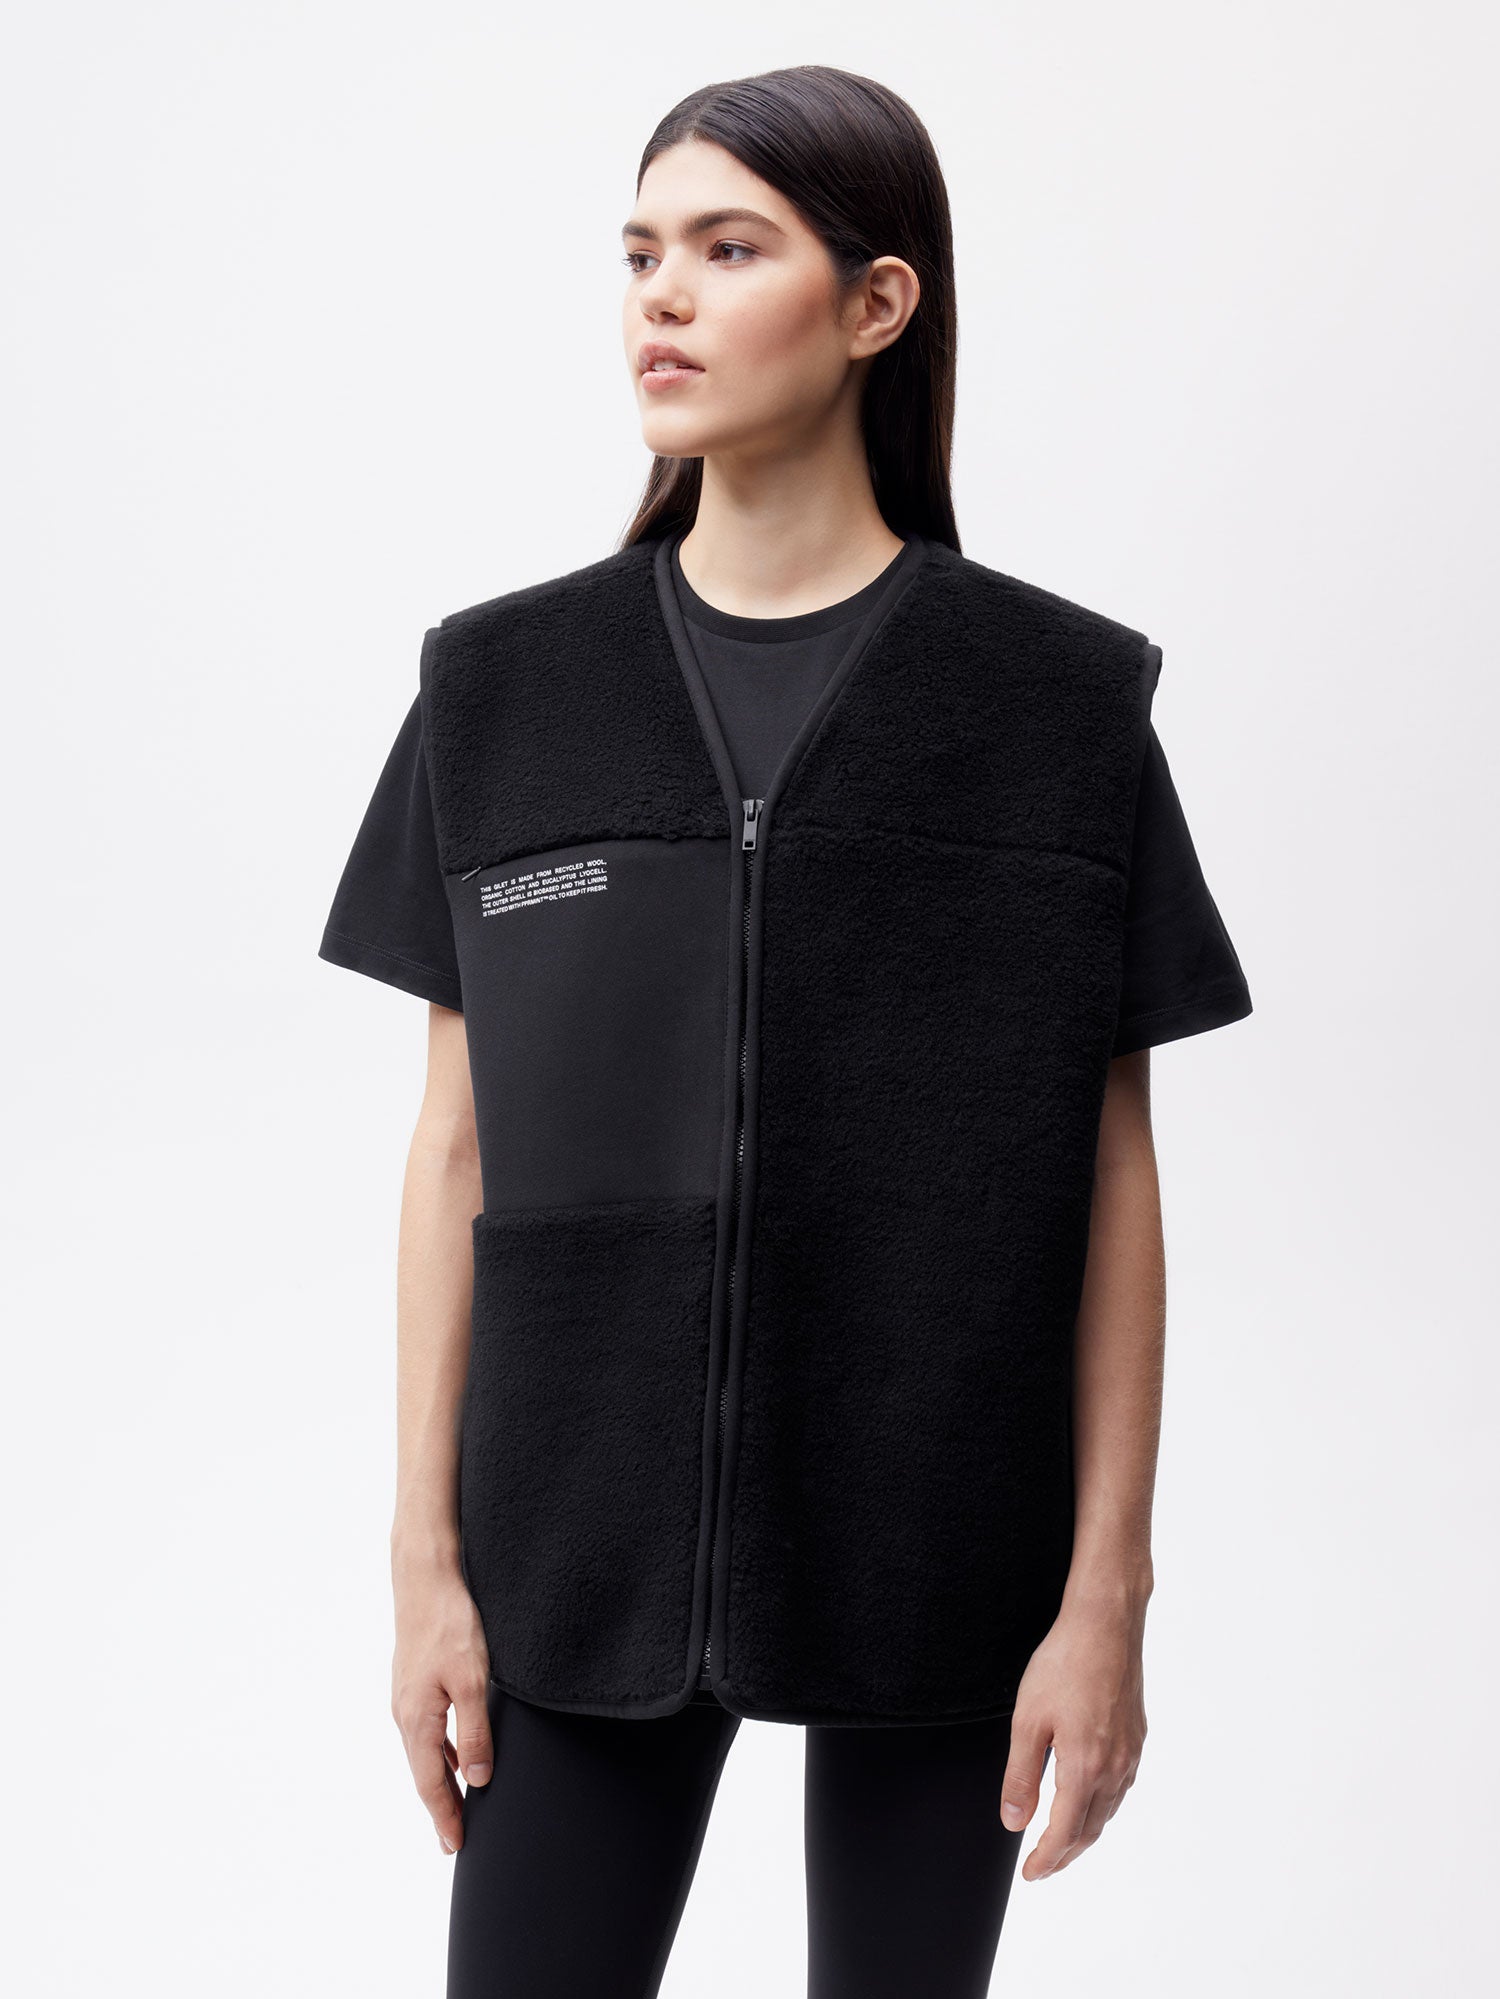 Recycled Wool Fleece Gilet—black female